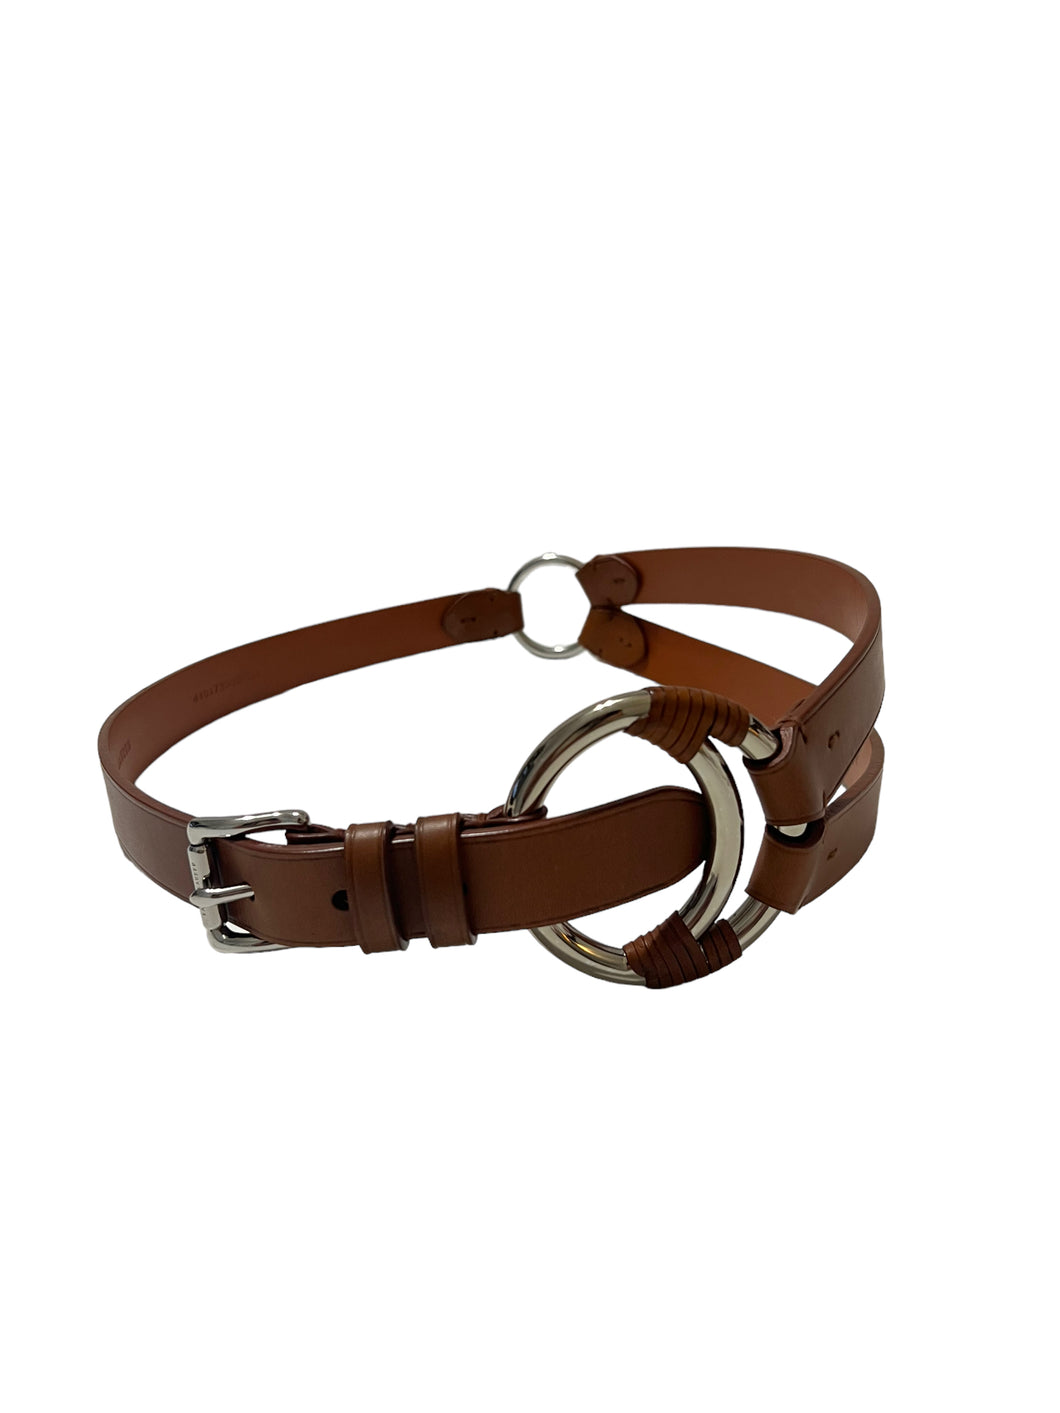 RALPH LAUREN Vachetta Leather Crescent O-Ring Equestrian TRI-STRAP Waist Belt M